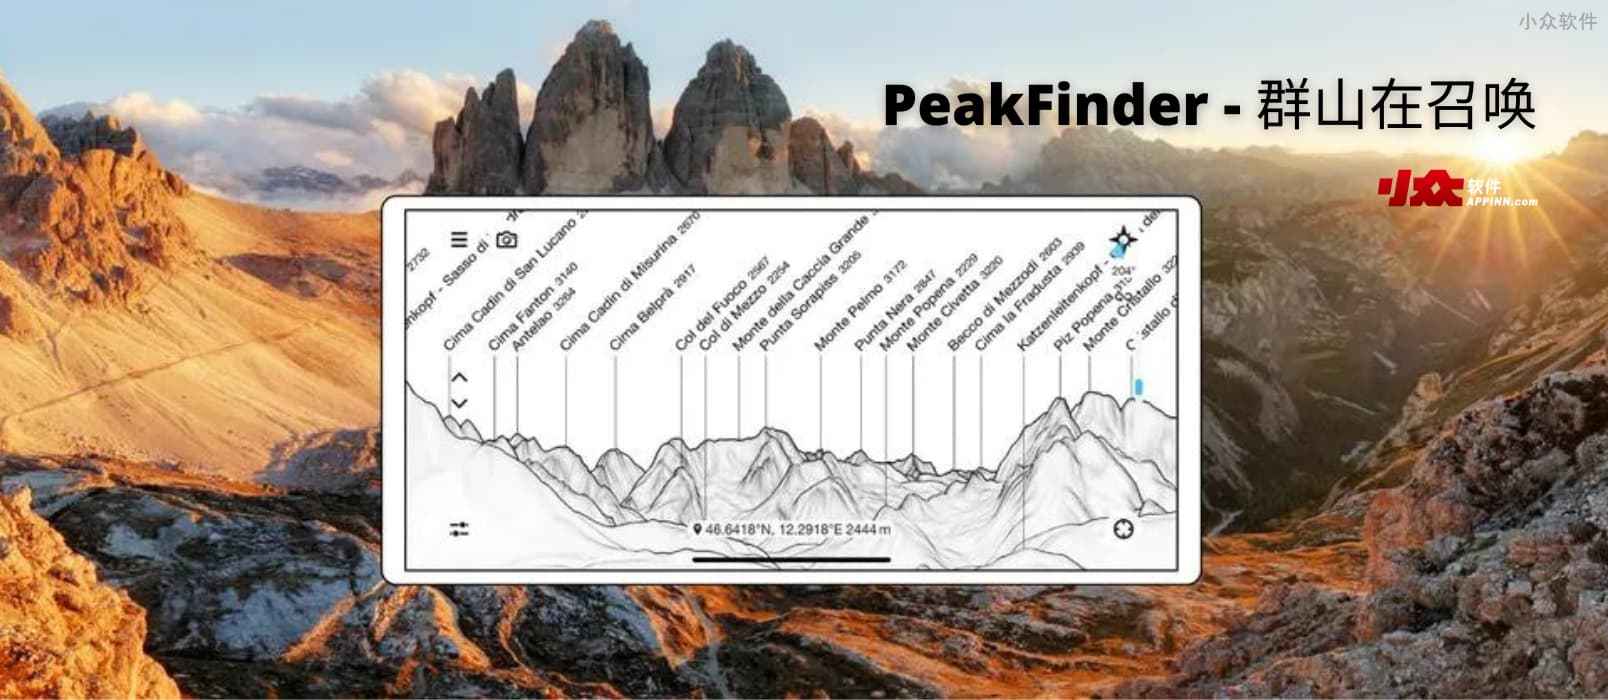 PeakFinder – 群山在召唤，超过 95 万座山峰，360°全景显示[iPhone/Android]